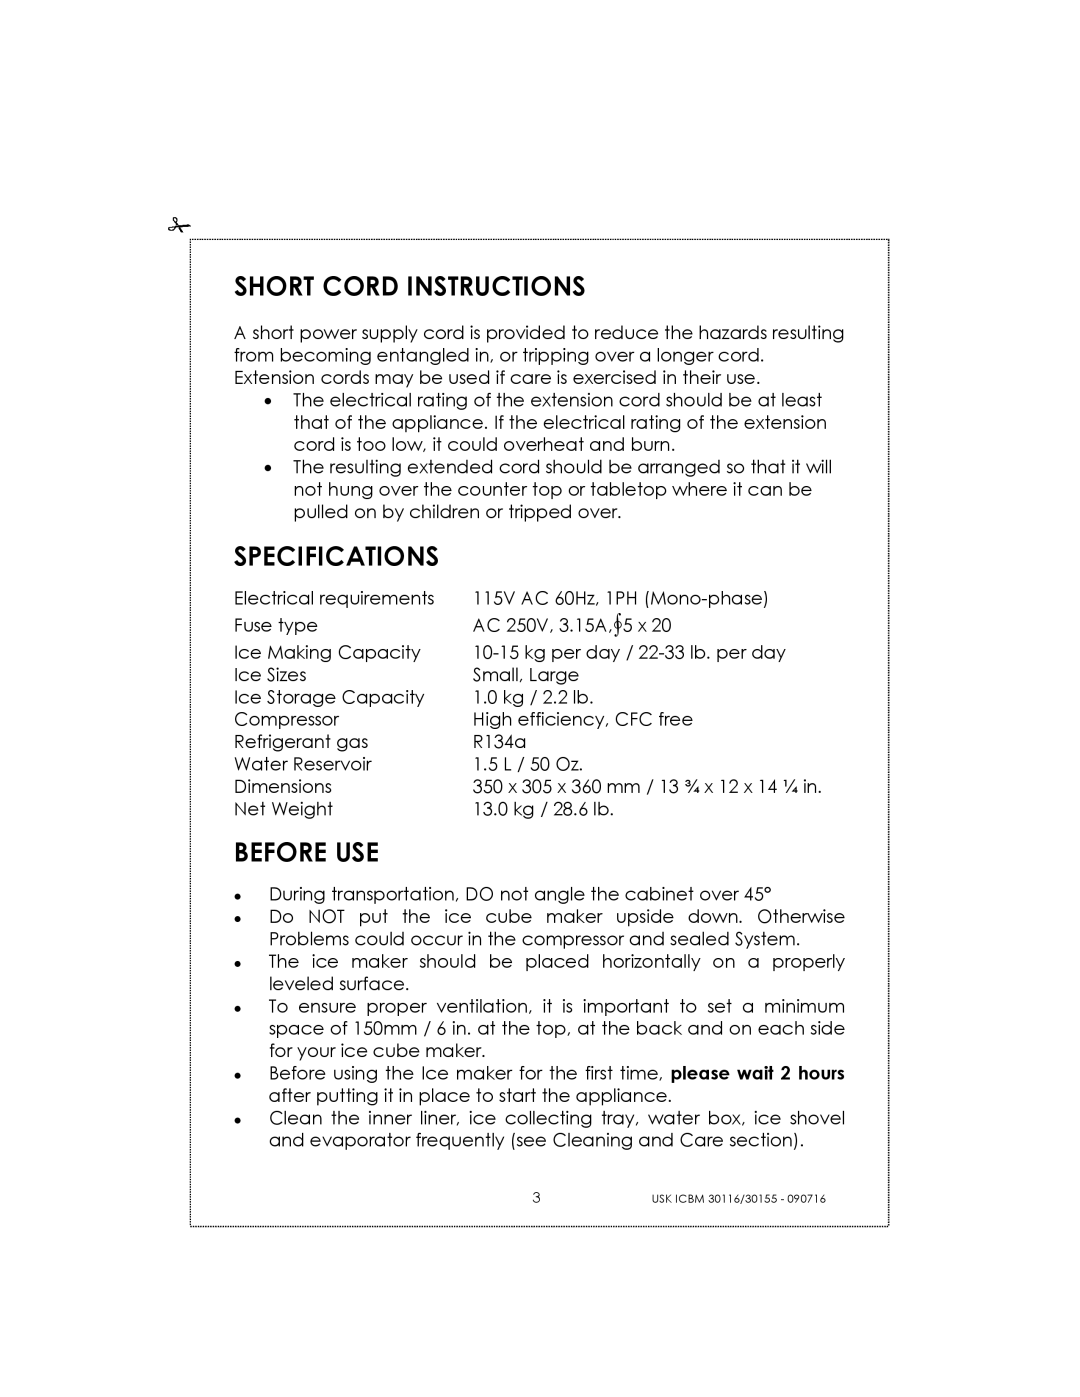 Kalorik USK ICBM 30155, USK ICBM 30116 manual Short Cord Instructions, Specifications, Before Use 